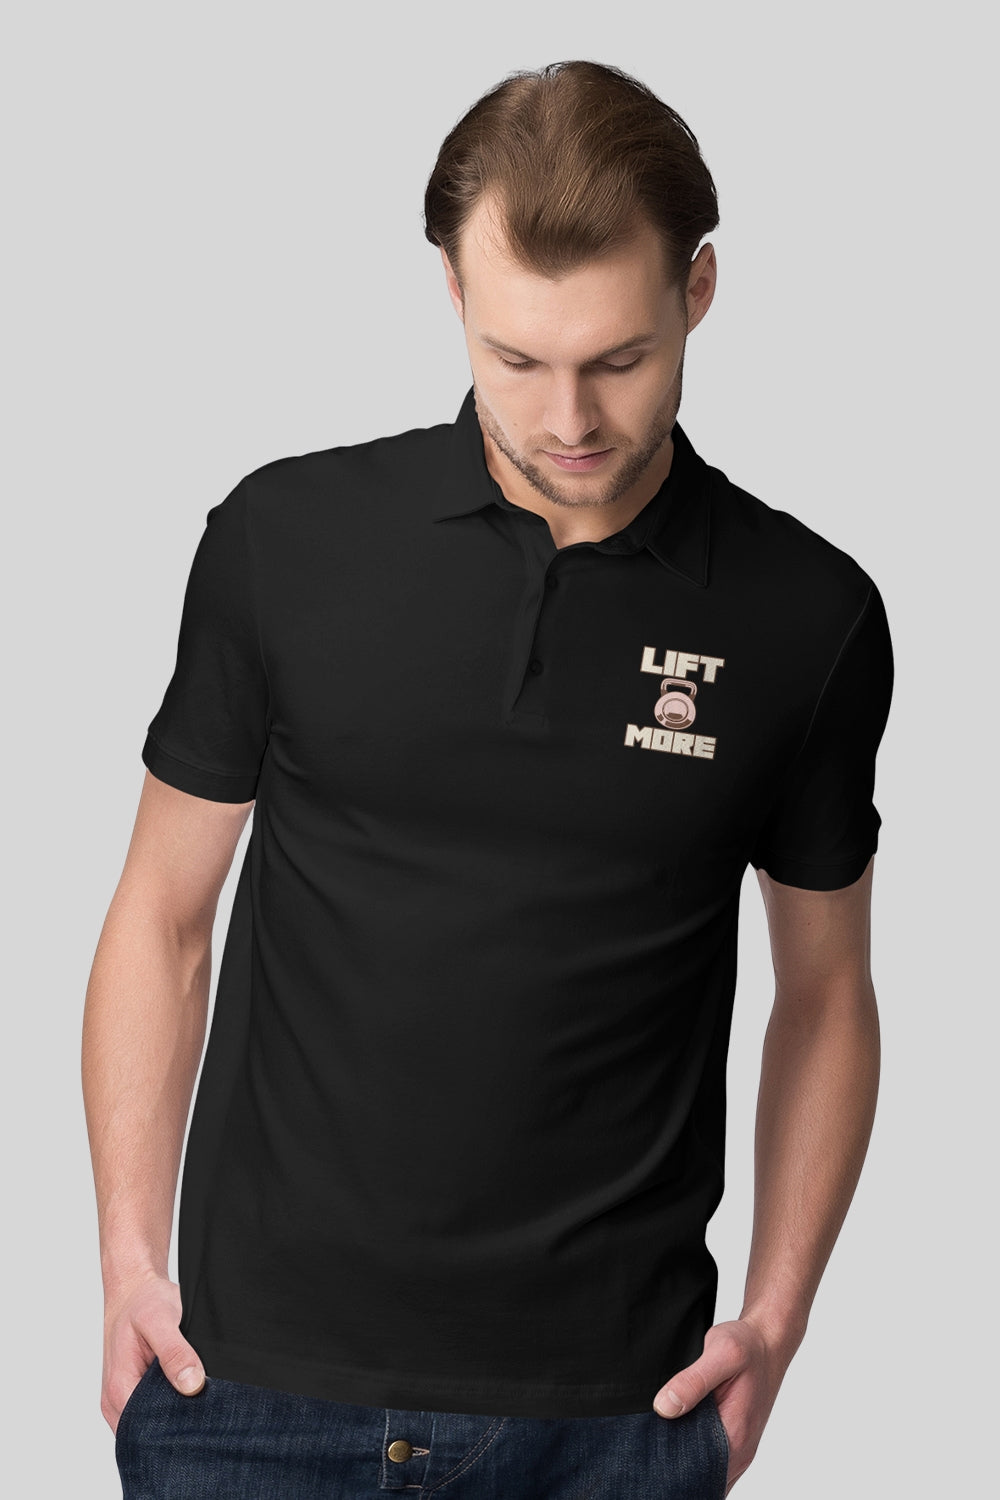 Lift More Pocket Printed Black Polo Shirt